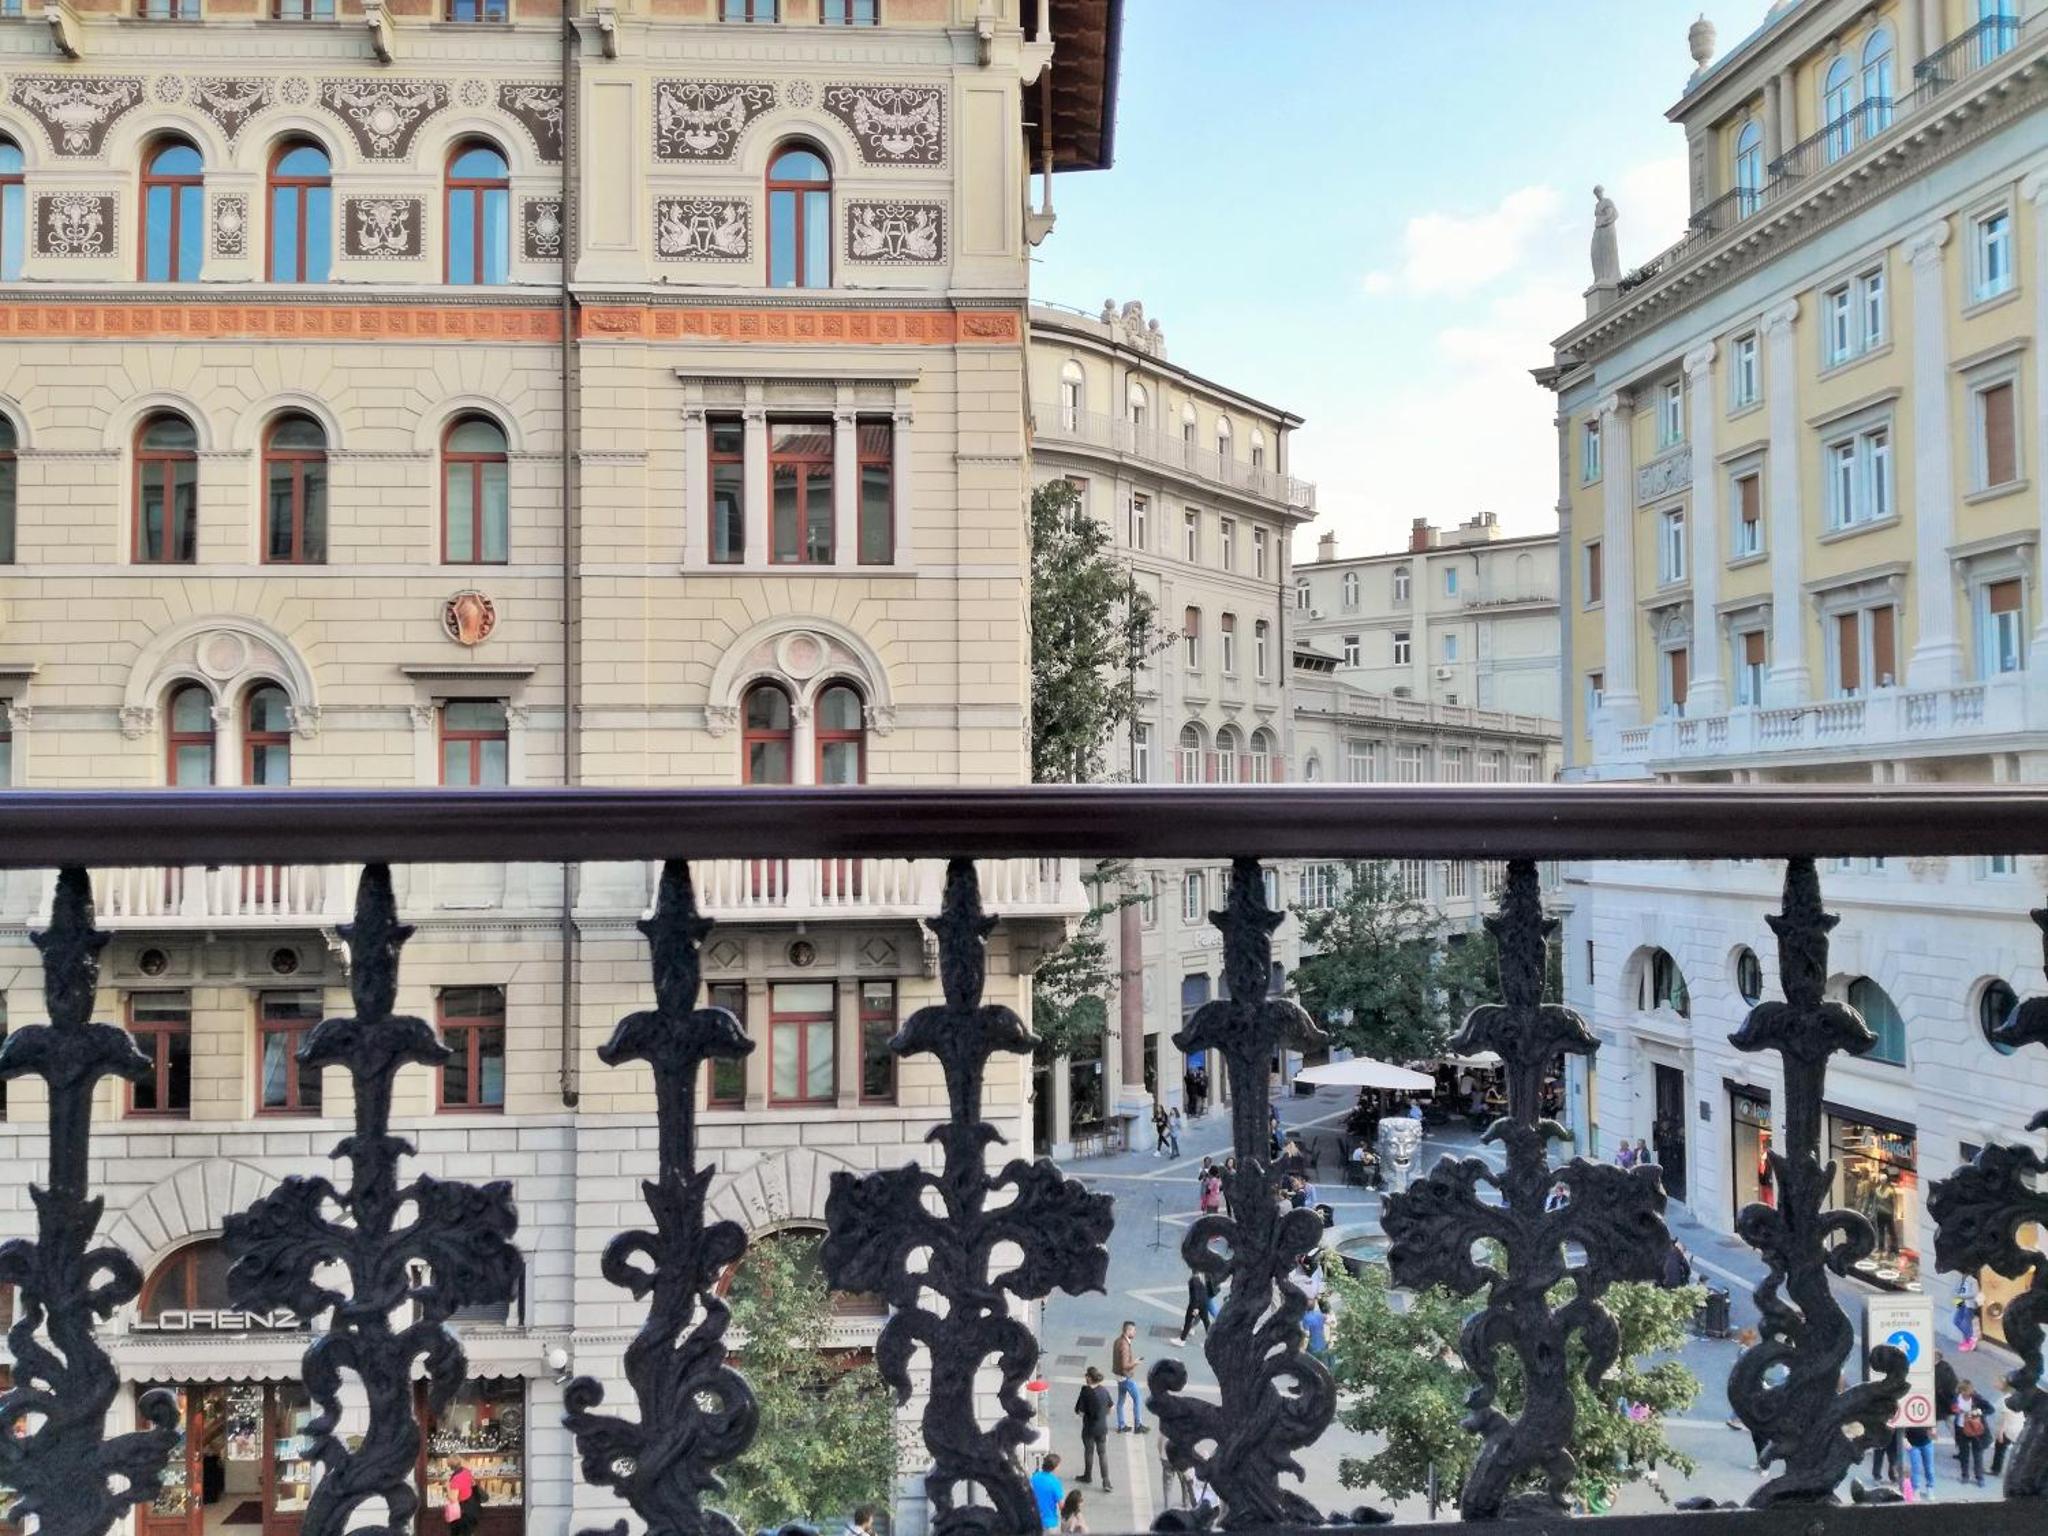 Trieste Center Rooms & Apartments